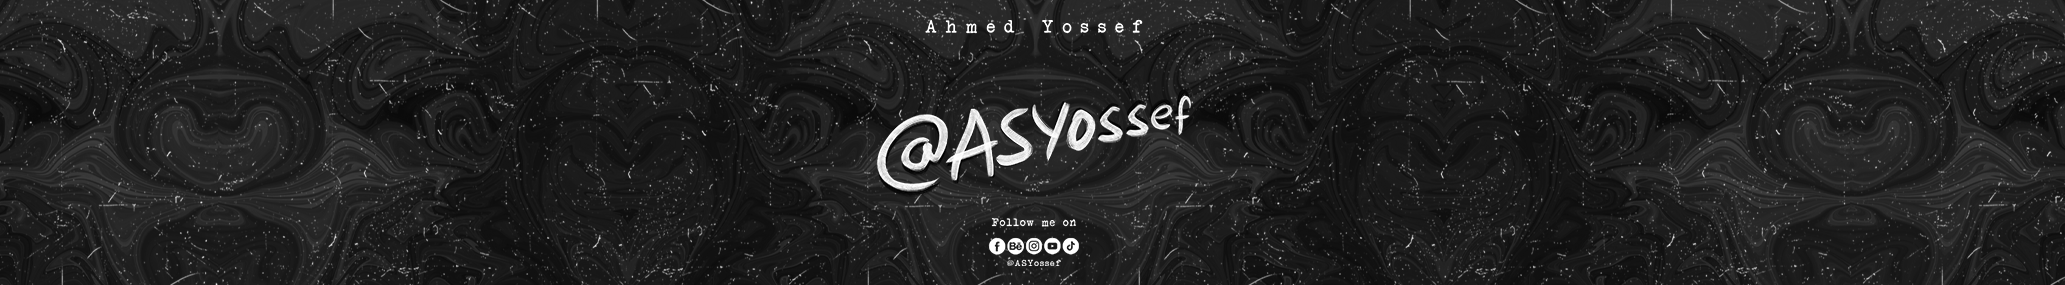 Баннер профиля Ahmed S. Yossef